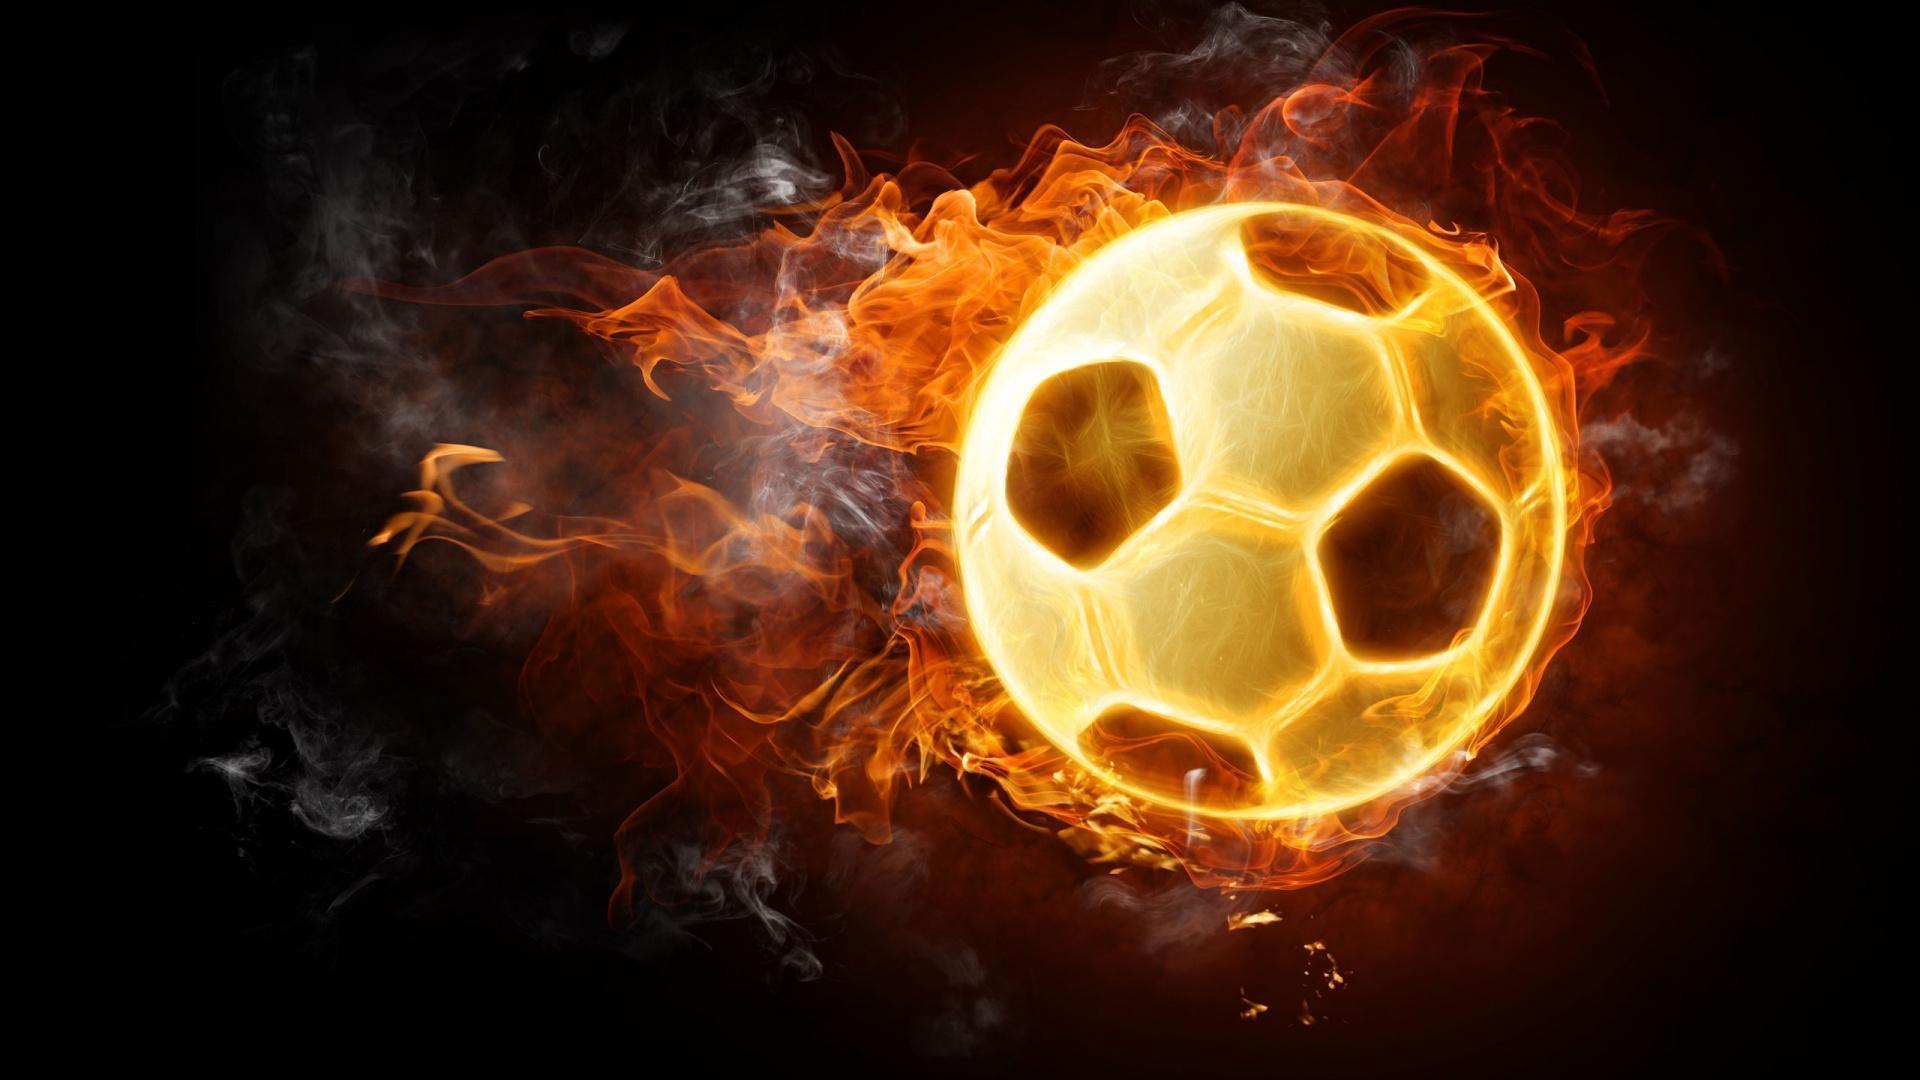 Football on Fire HD Wallpaper for Desktop. HD Wallpaper